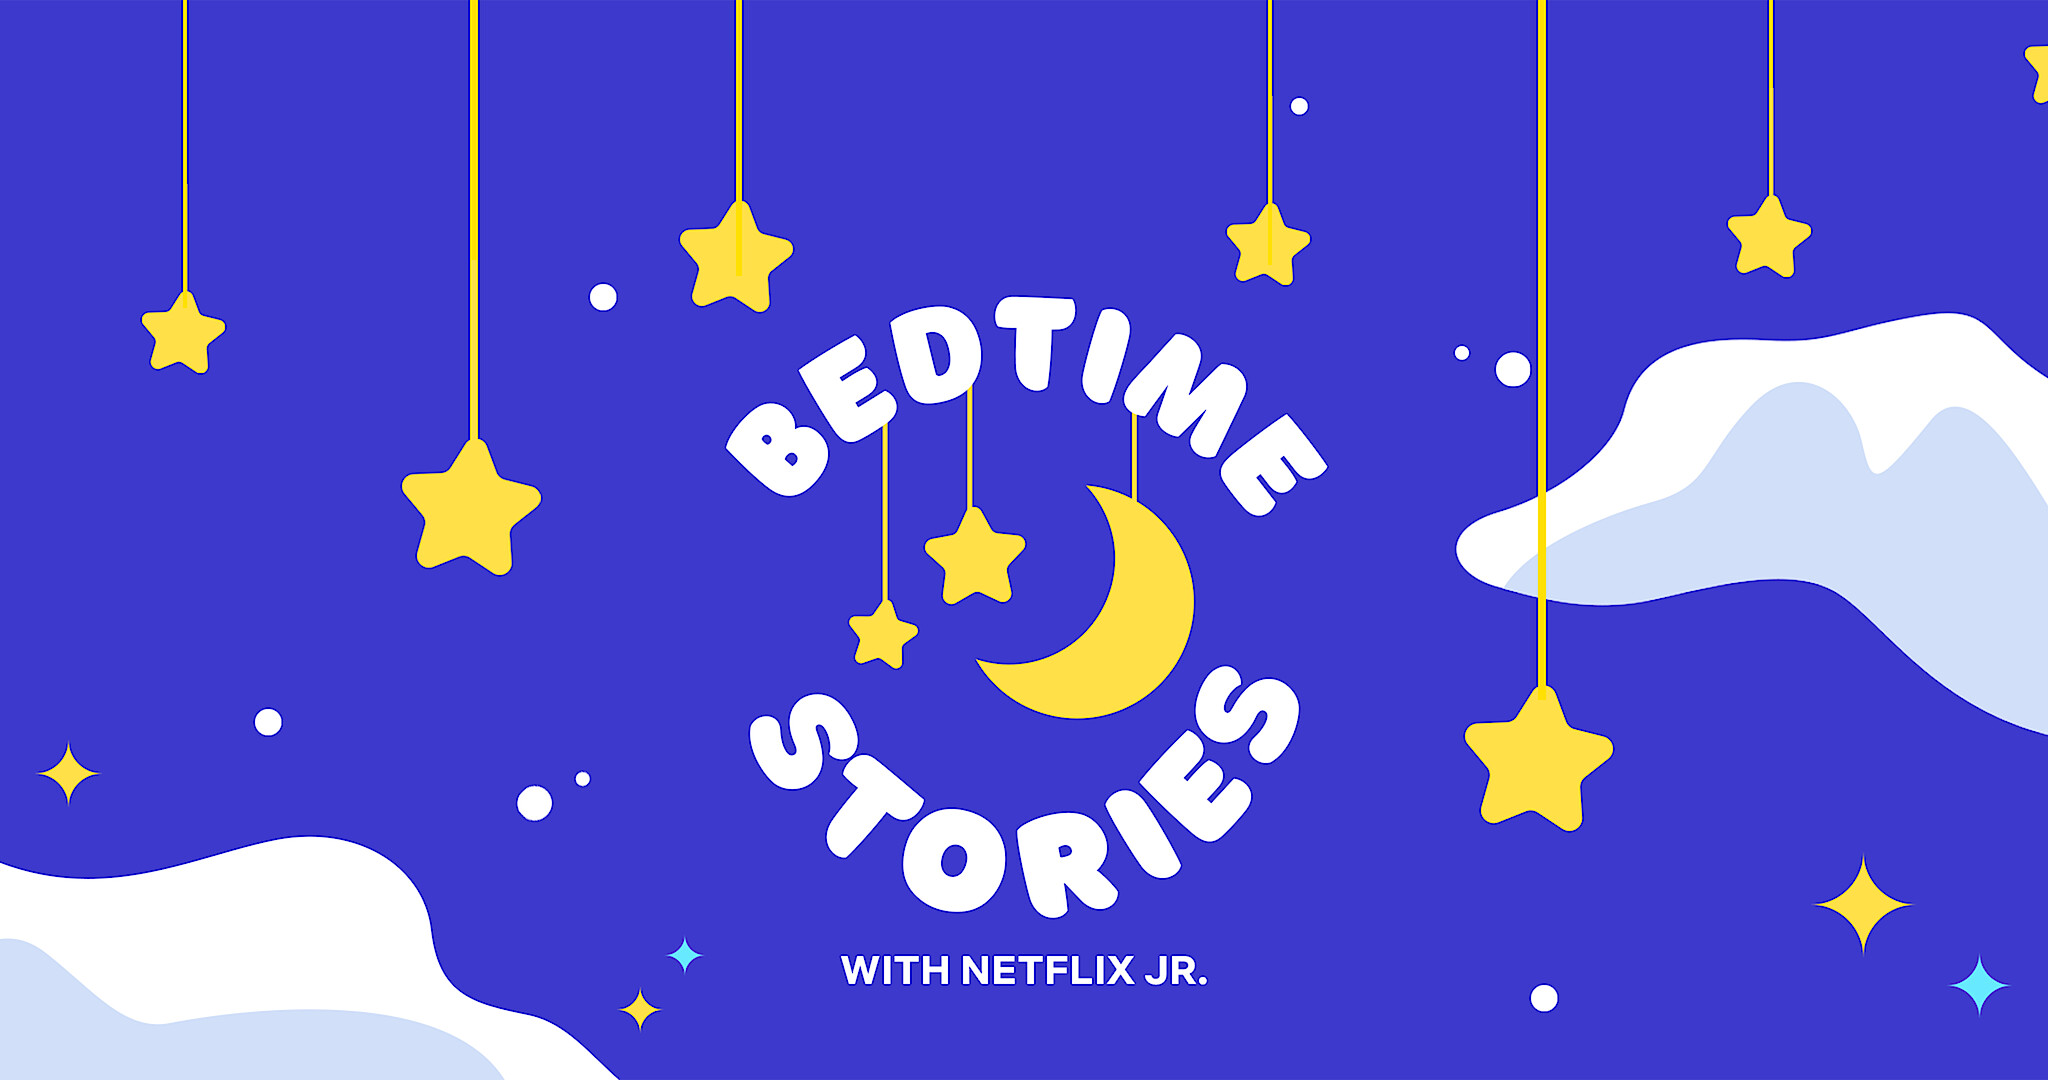 Netflix's New Podcast Series For Kids Will Help With Sleep - Netflix Tudum